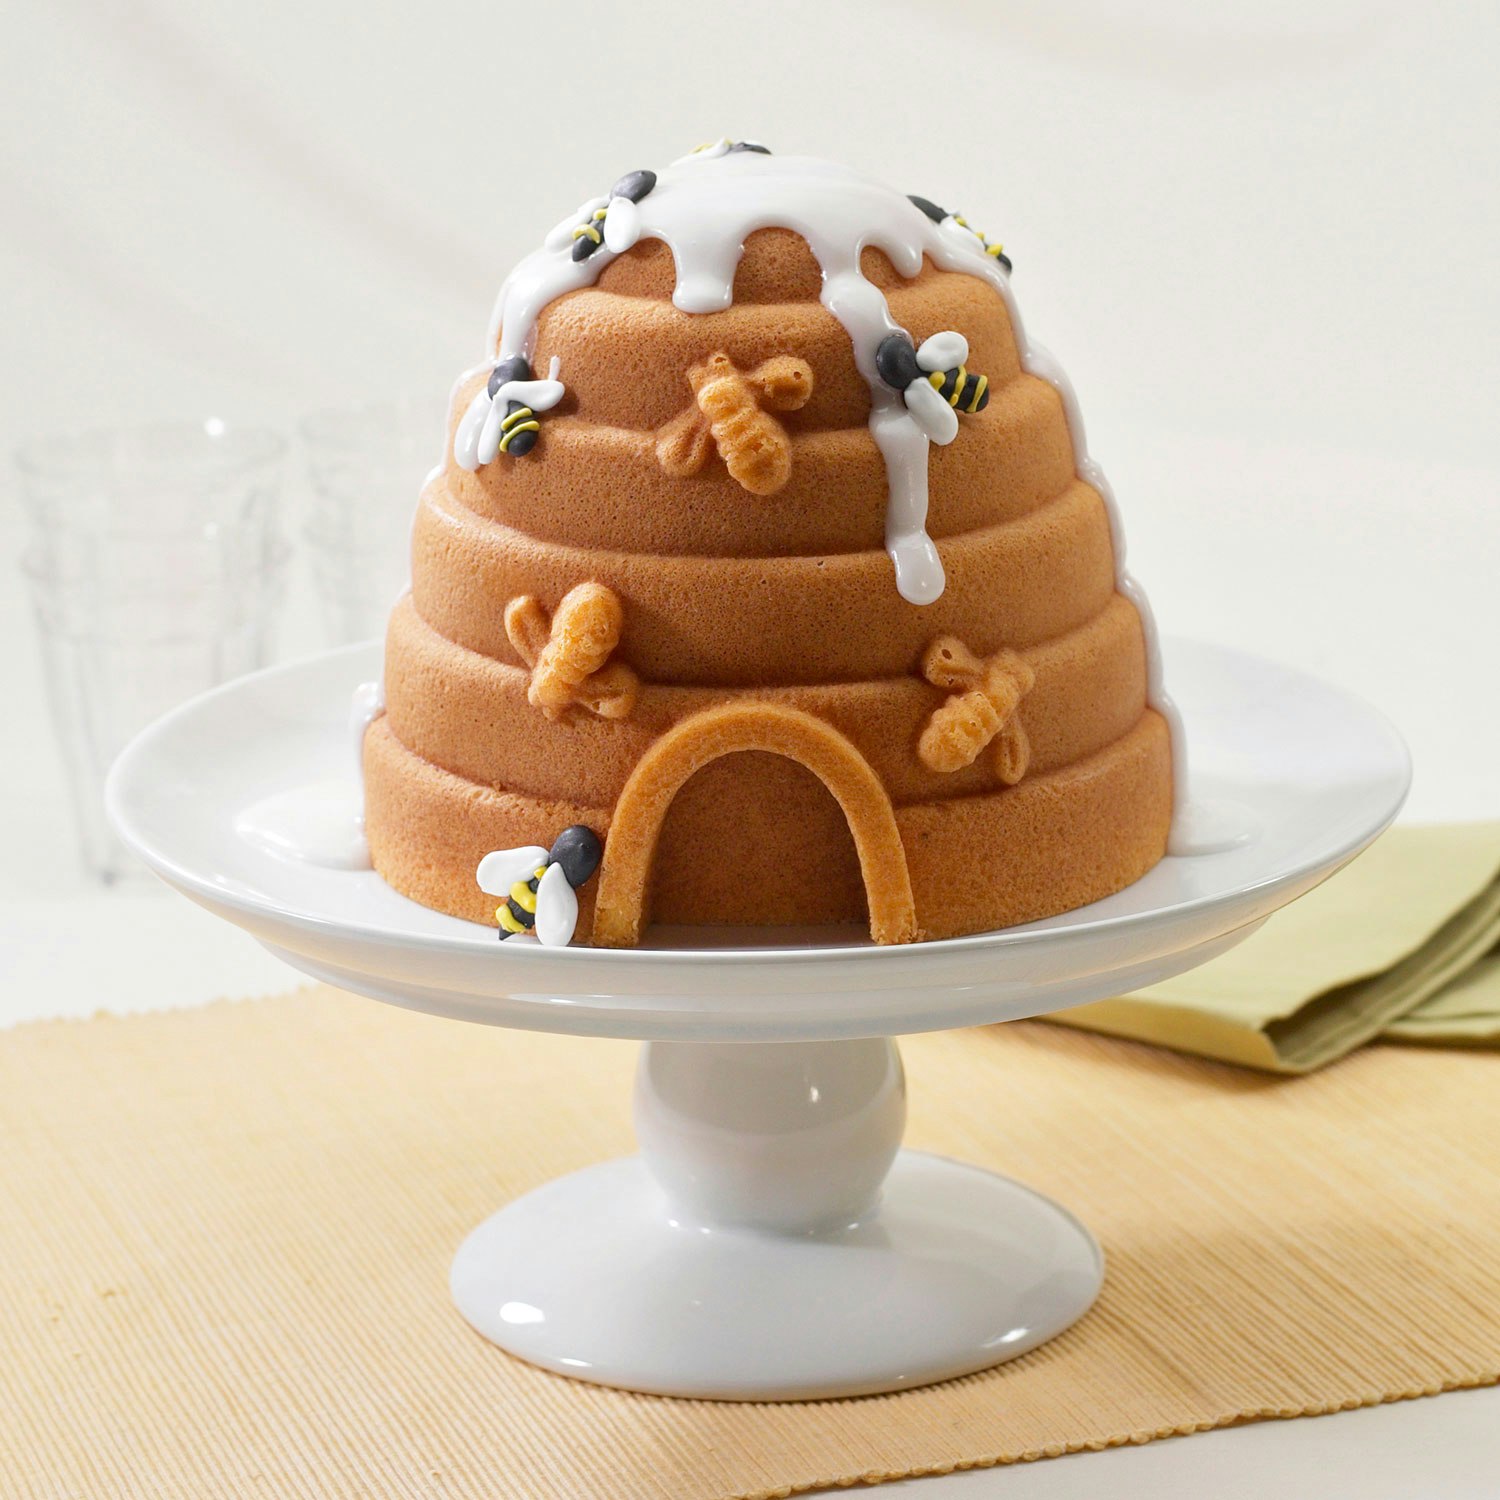 https://royaldesign.com/image/11/nordic-ware-nordic-ware-beehive-cake-bundt-pan-1